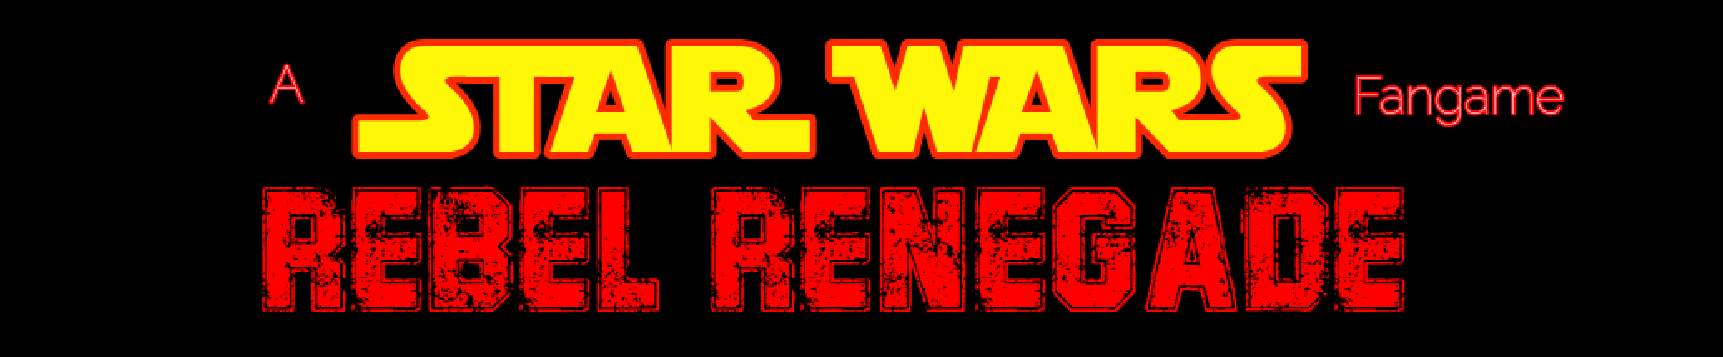 A Star Wars Fangame - Rebel Renegade